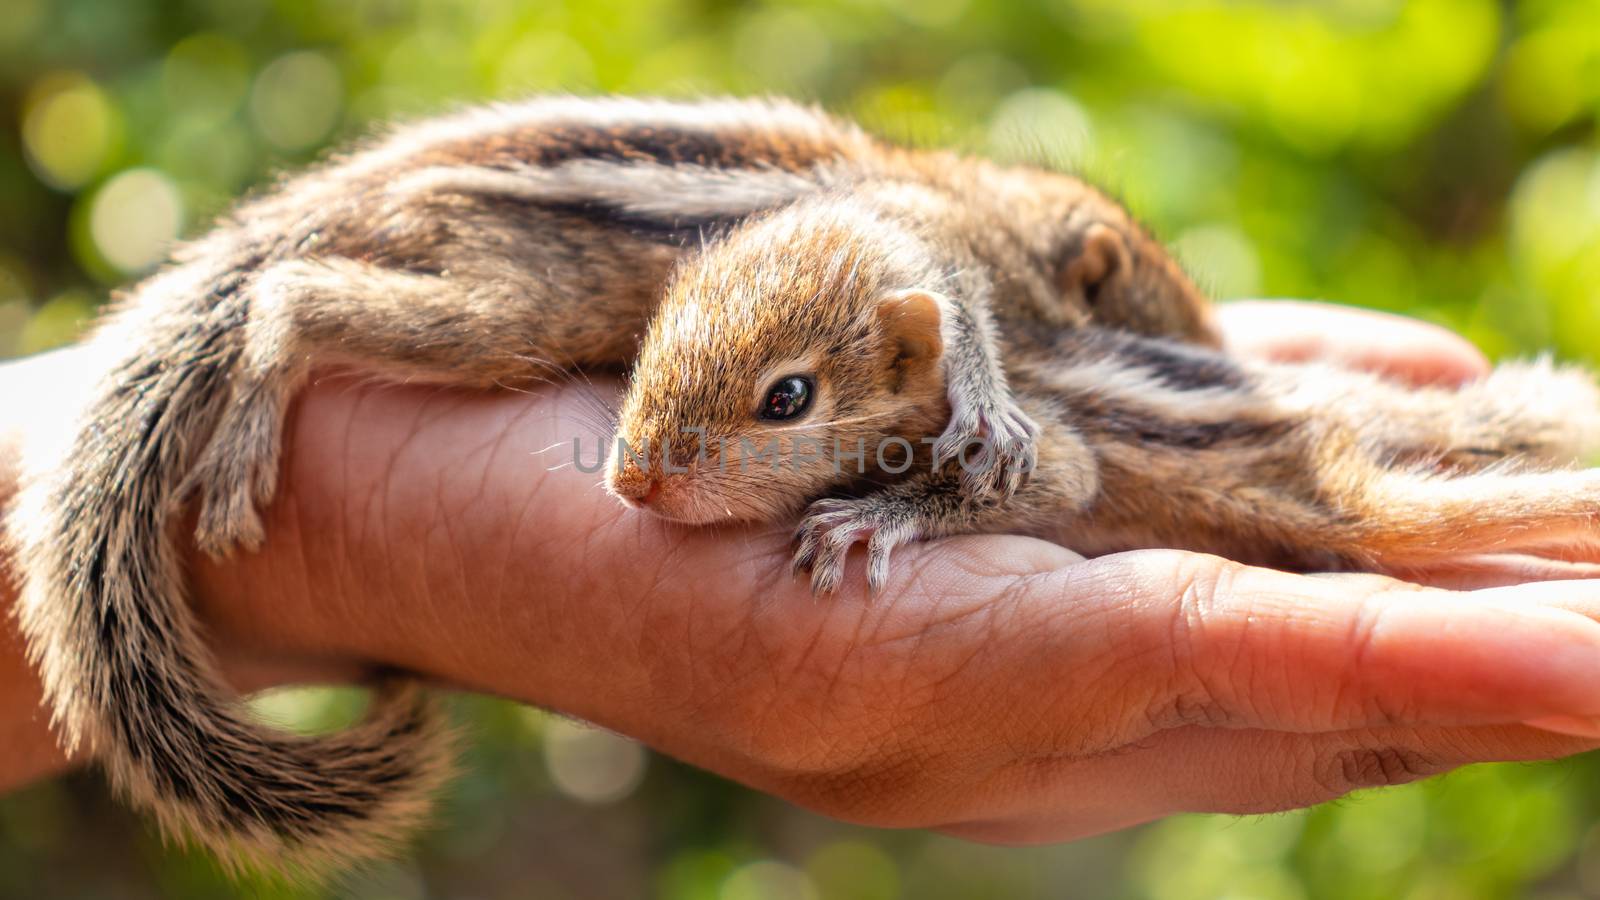 Cute small baby squirrels resting on girls hand by nilanka